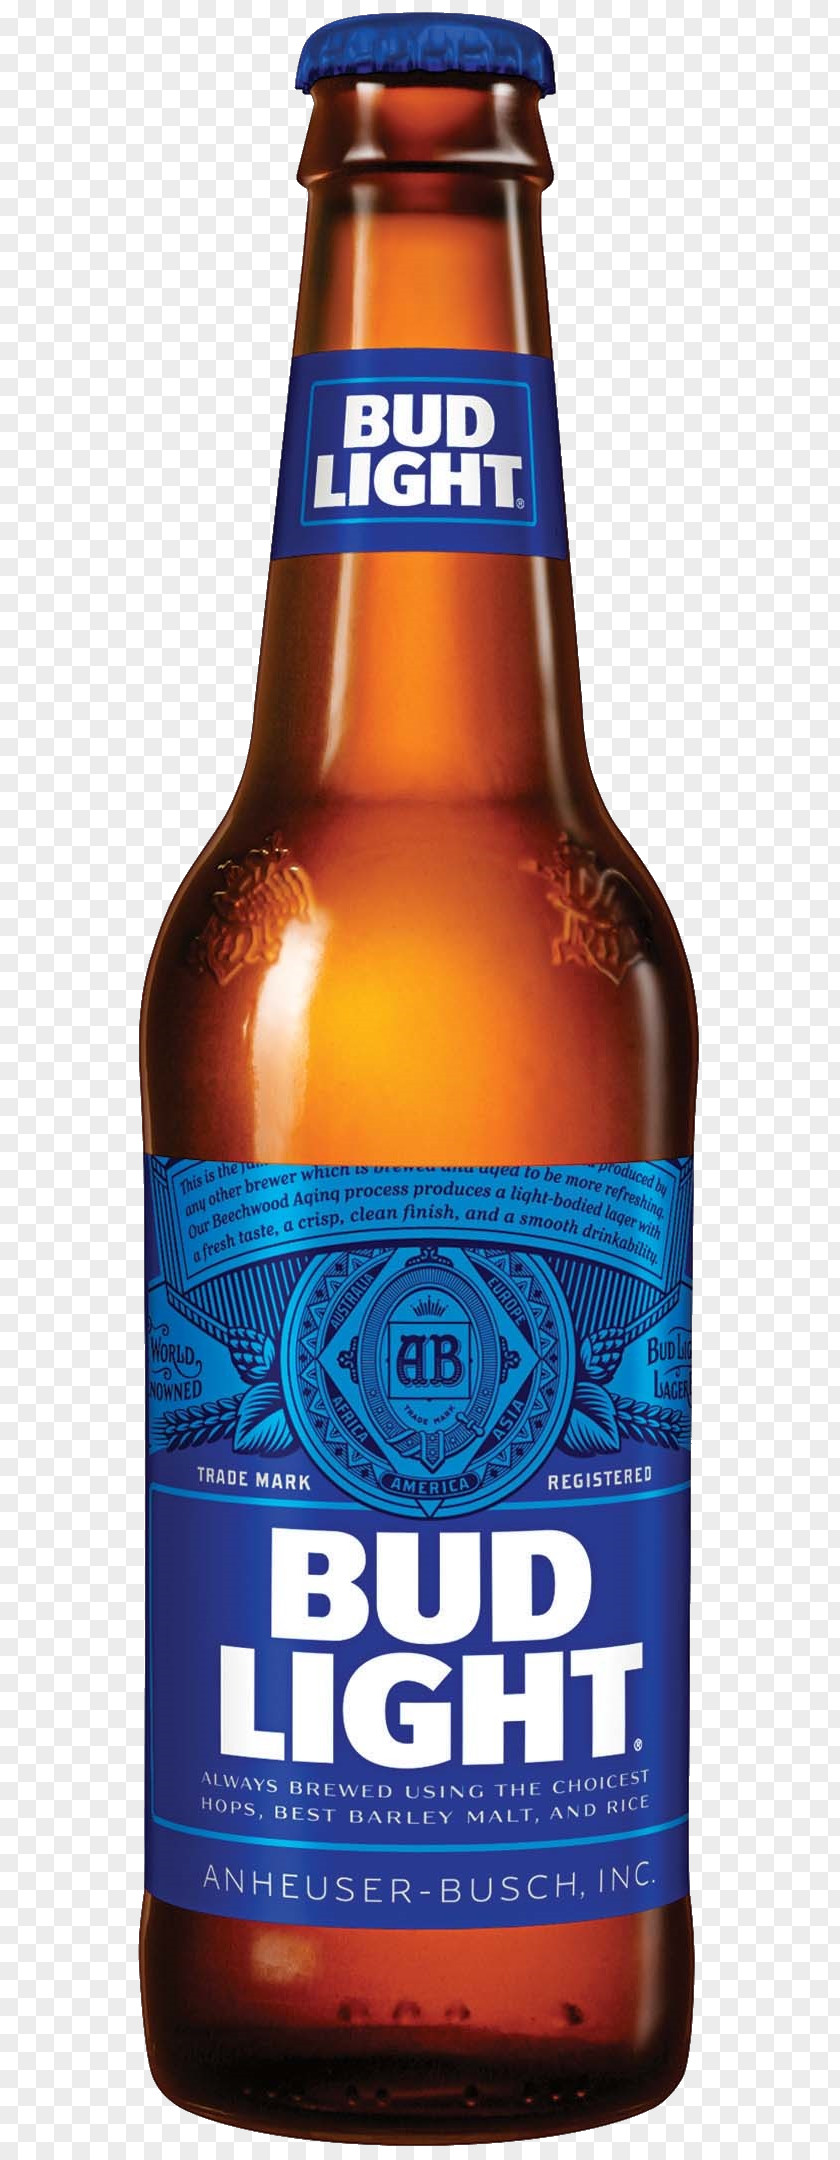 Beer Bottle Cap Budweiser Pale Lager New Belgium Brewing Company Anheuser-Busch Bud Light PNG